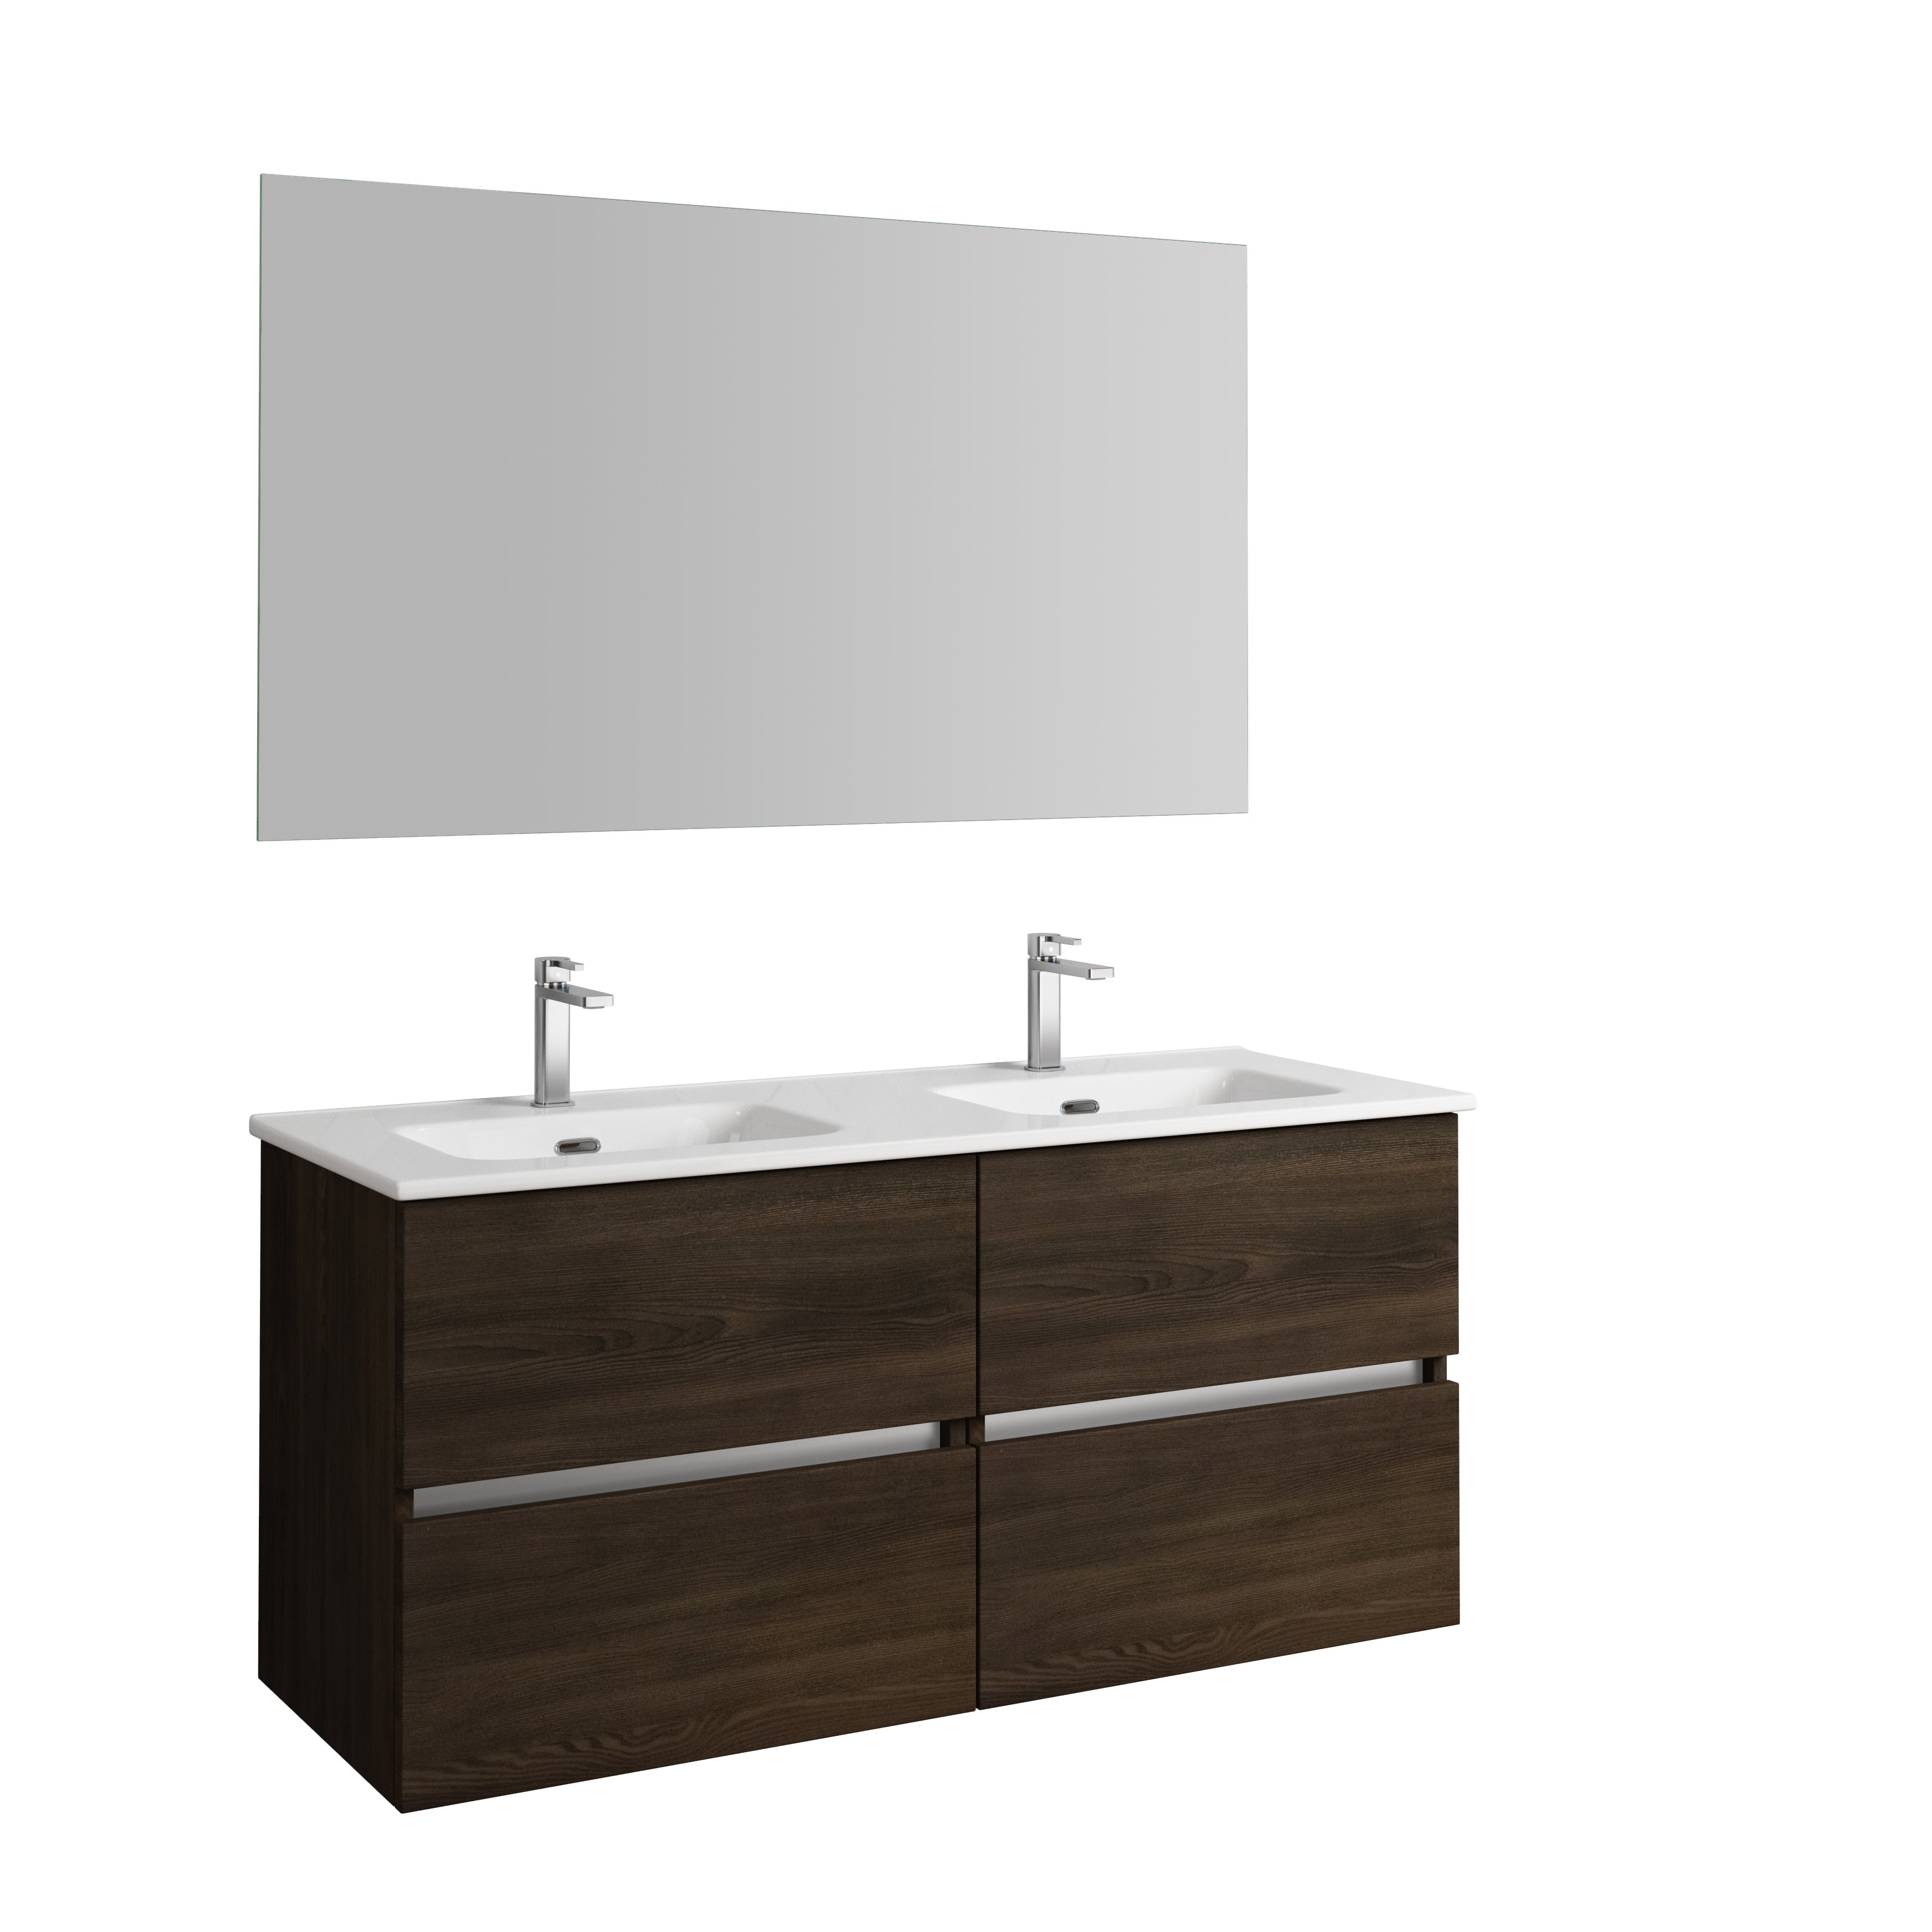 DAX Ibiza Single Vanity Cabinet With Onix Basin